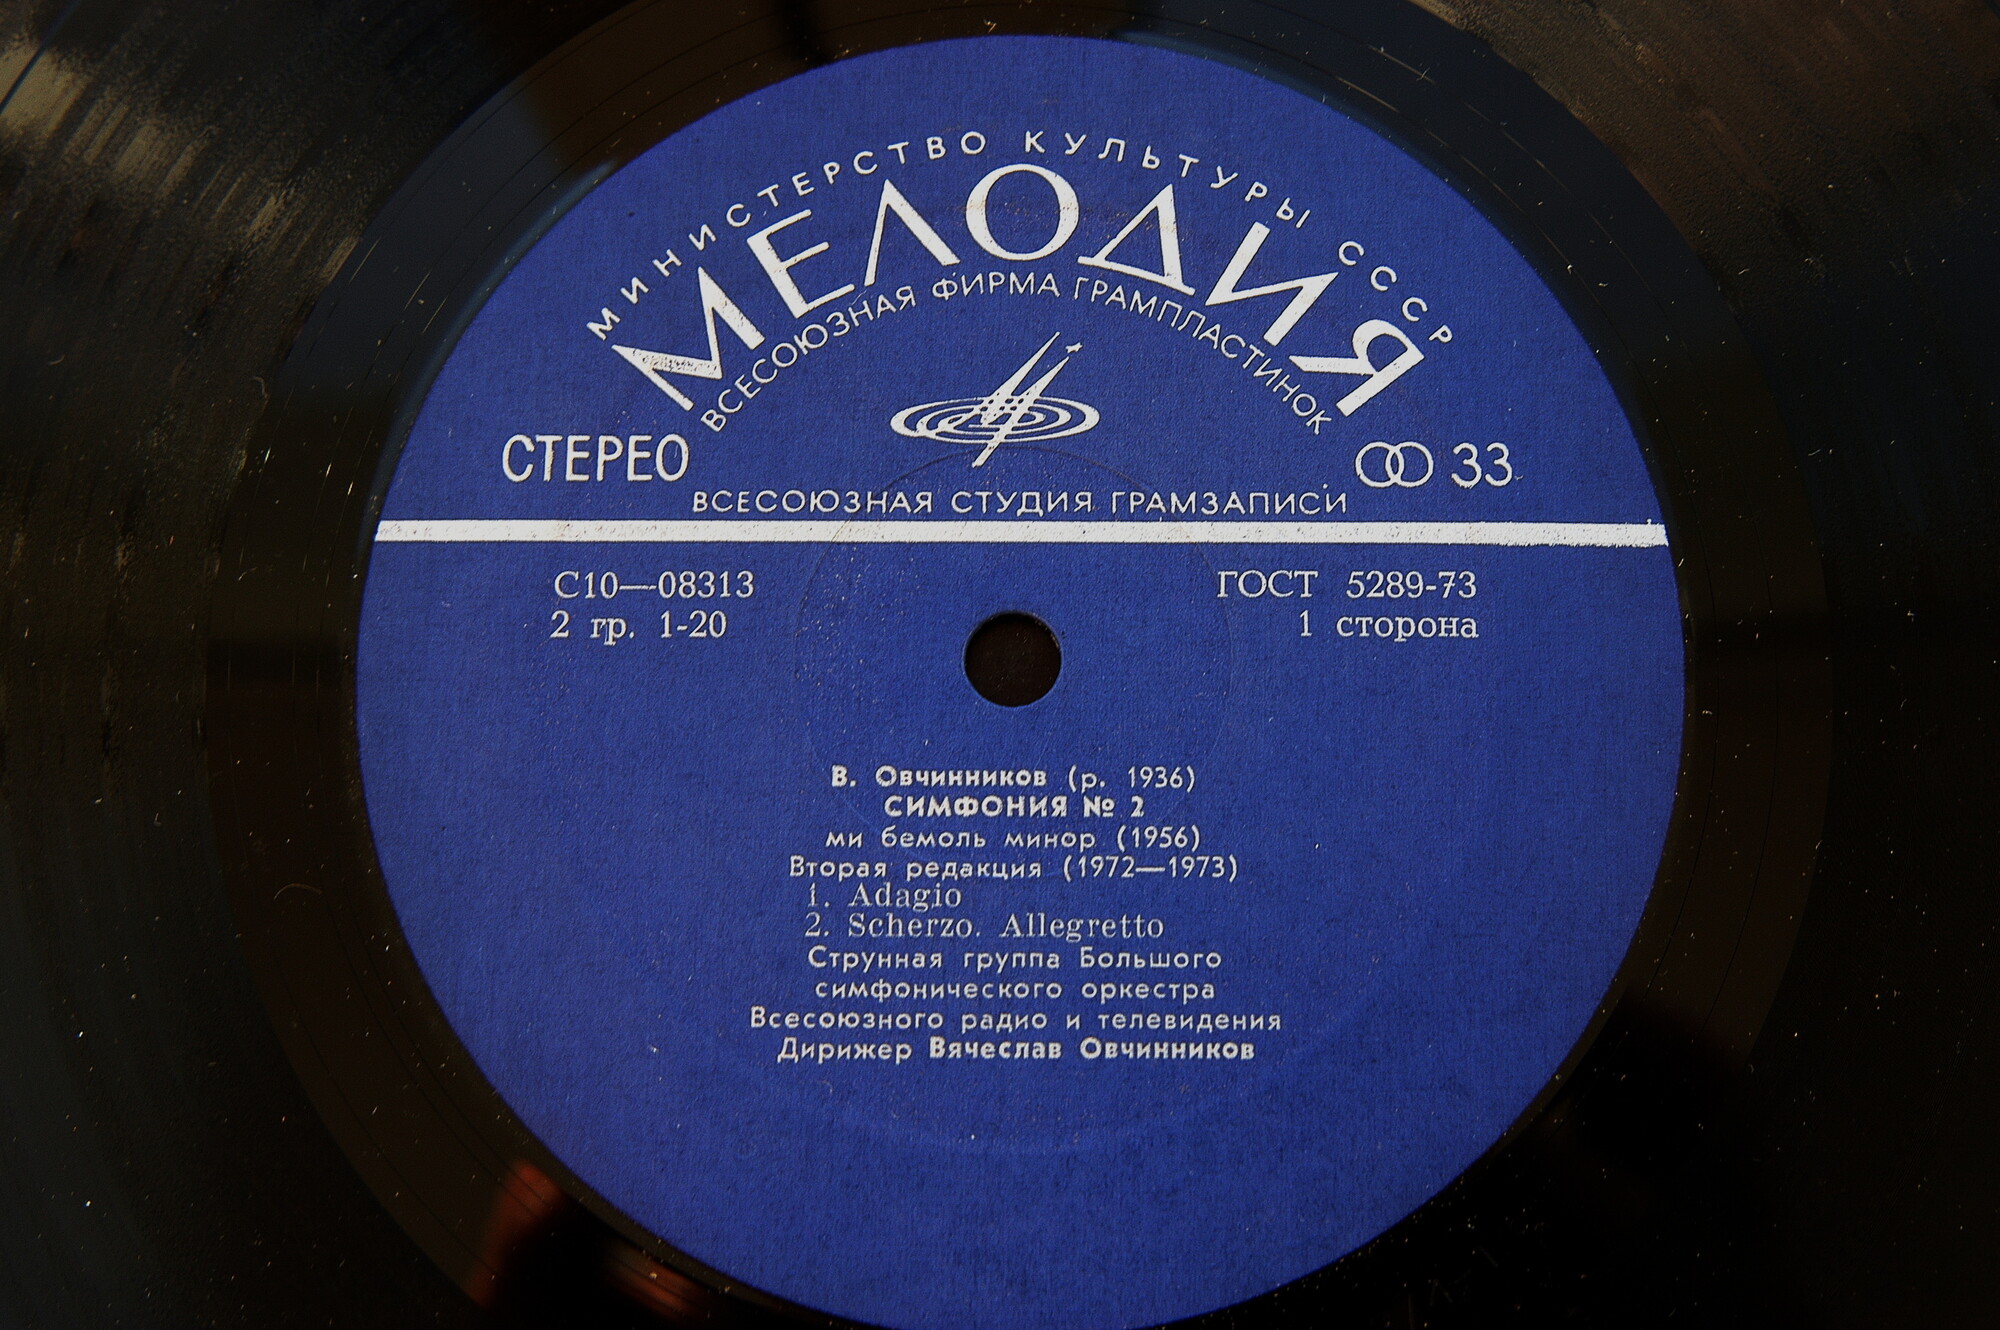 В. ОВЧИННИКОВ (р. 1936) - Симфония № 2 / Песнь-баллада о строителях БАМа (кантата)